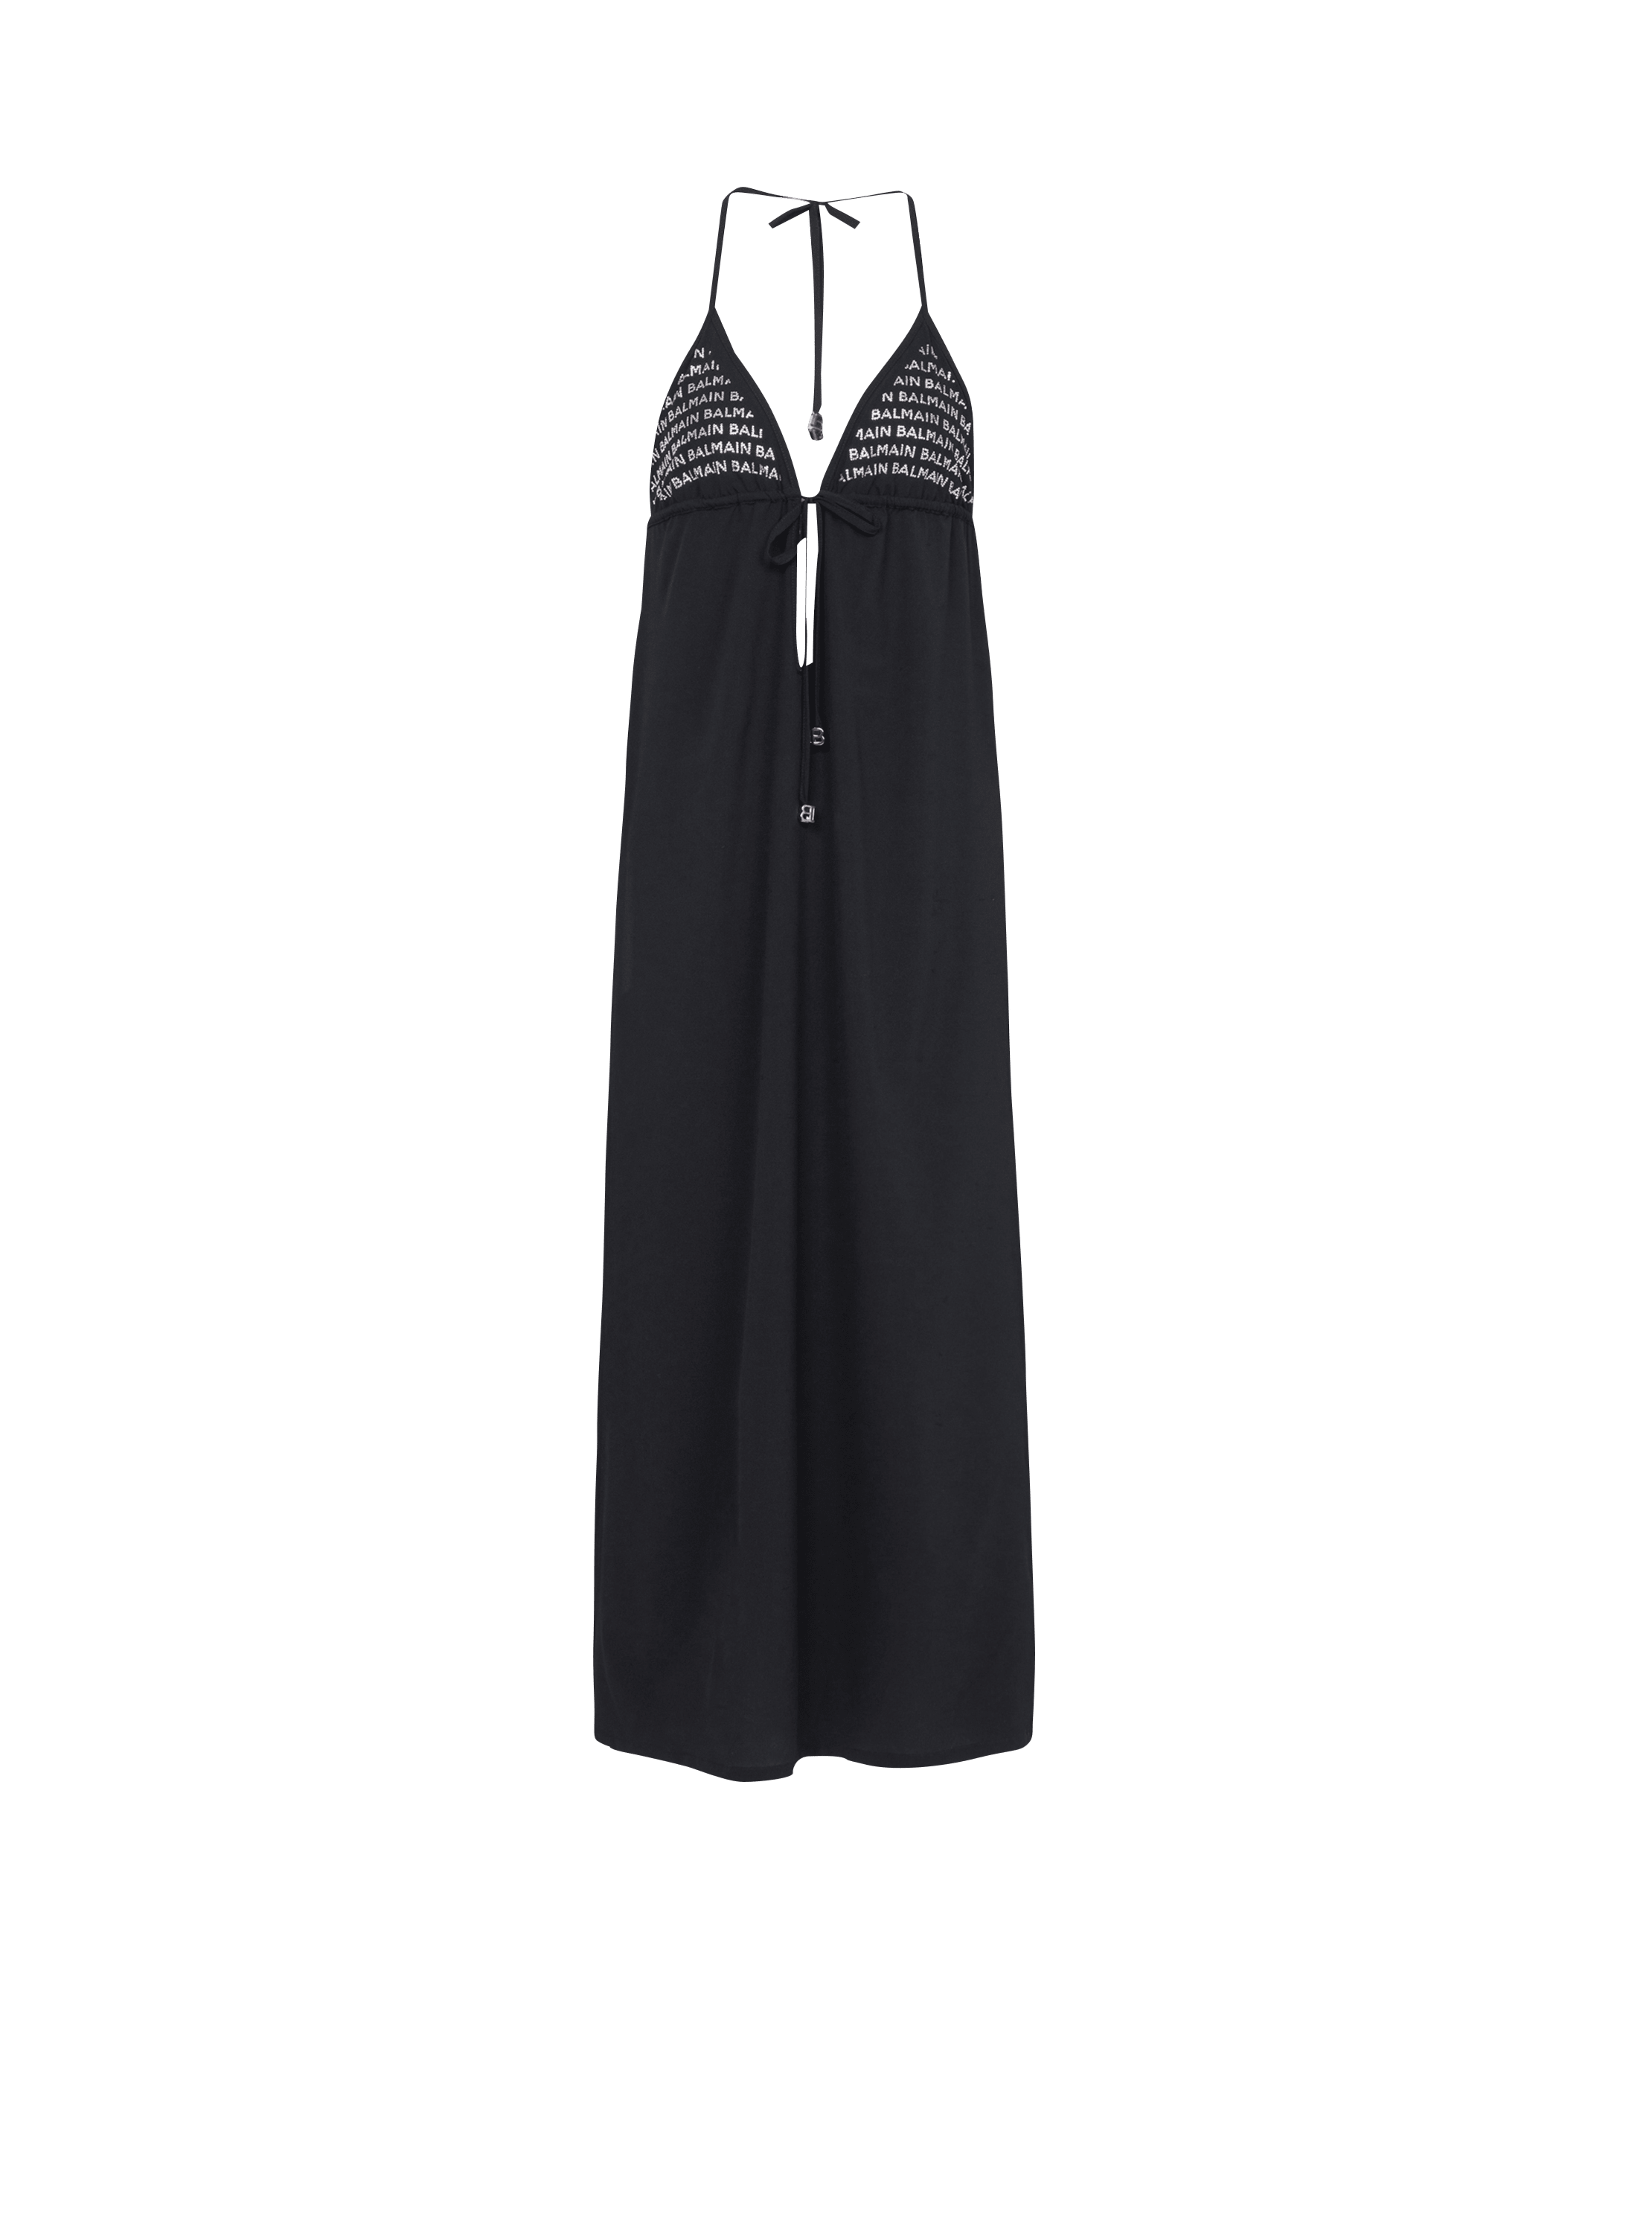 Balmain巴尔曼标志沙滩裙, black, hi-res